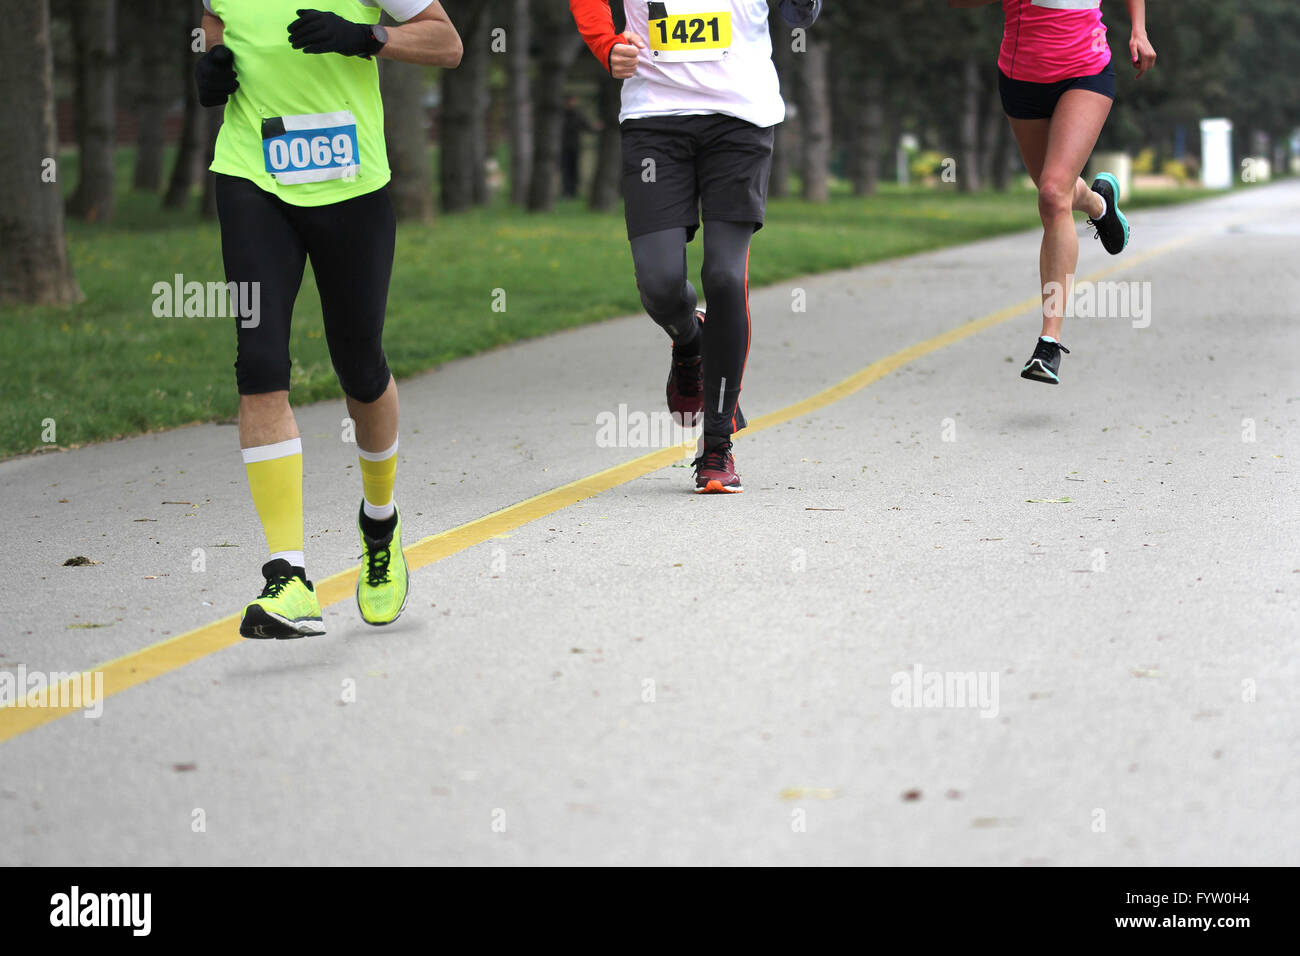 Three people running Cross country Marathon, Blured Motion Stock Photo